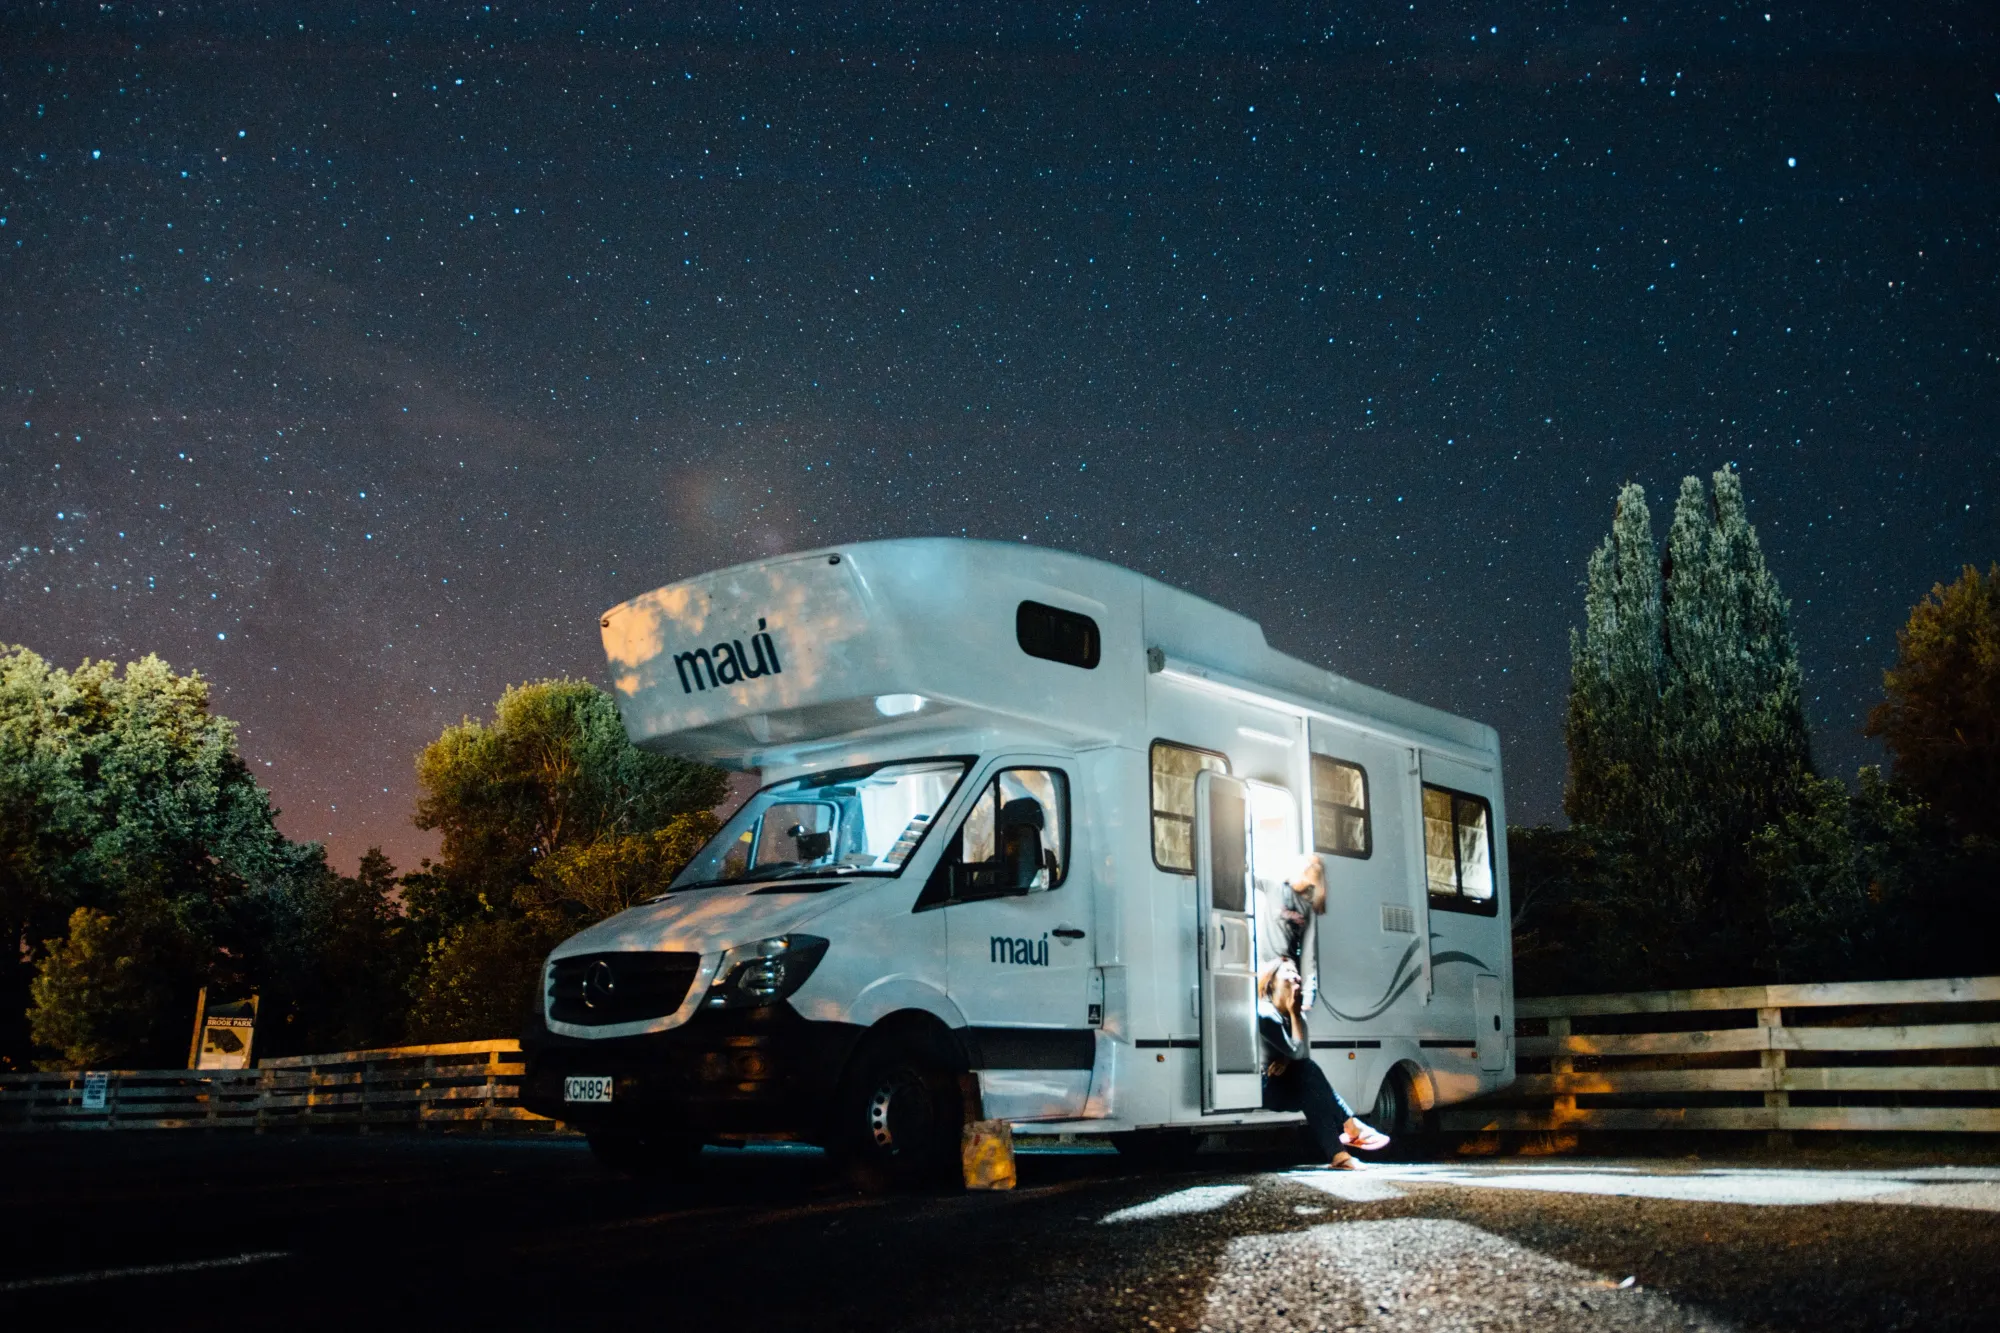 Image of a camper van under the night sky